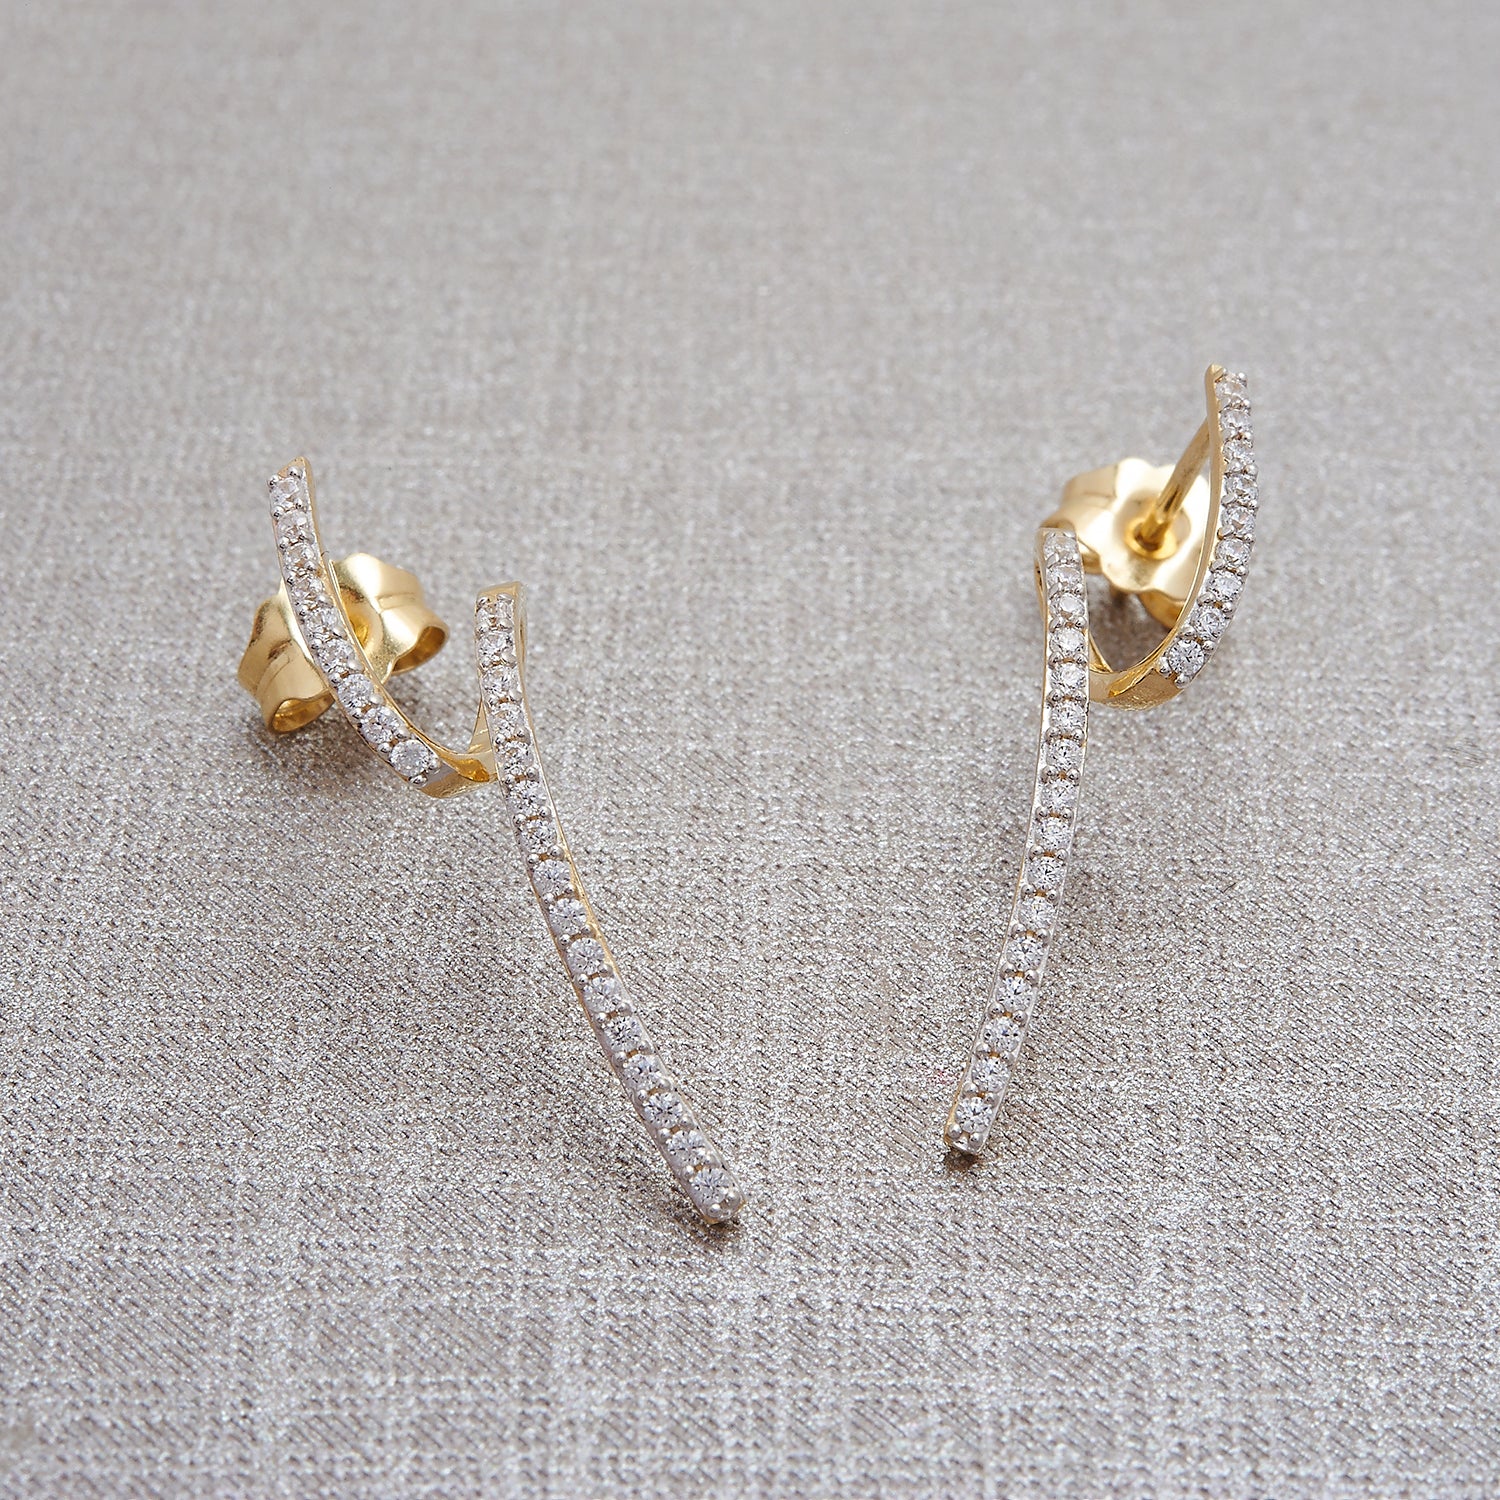 Eddi Diamond Free Form Earrings Placed On Cloth